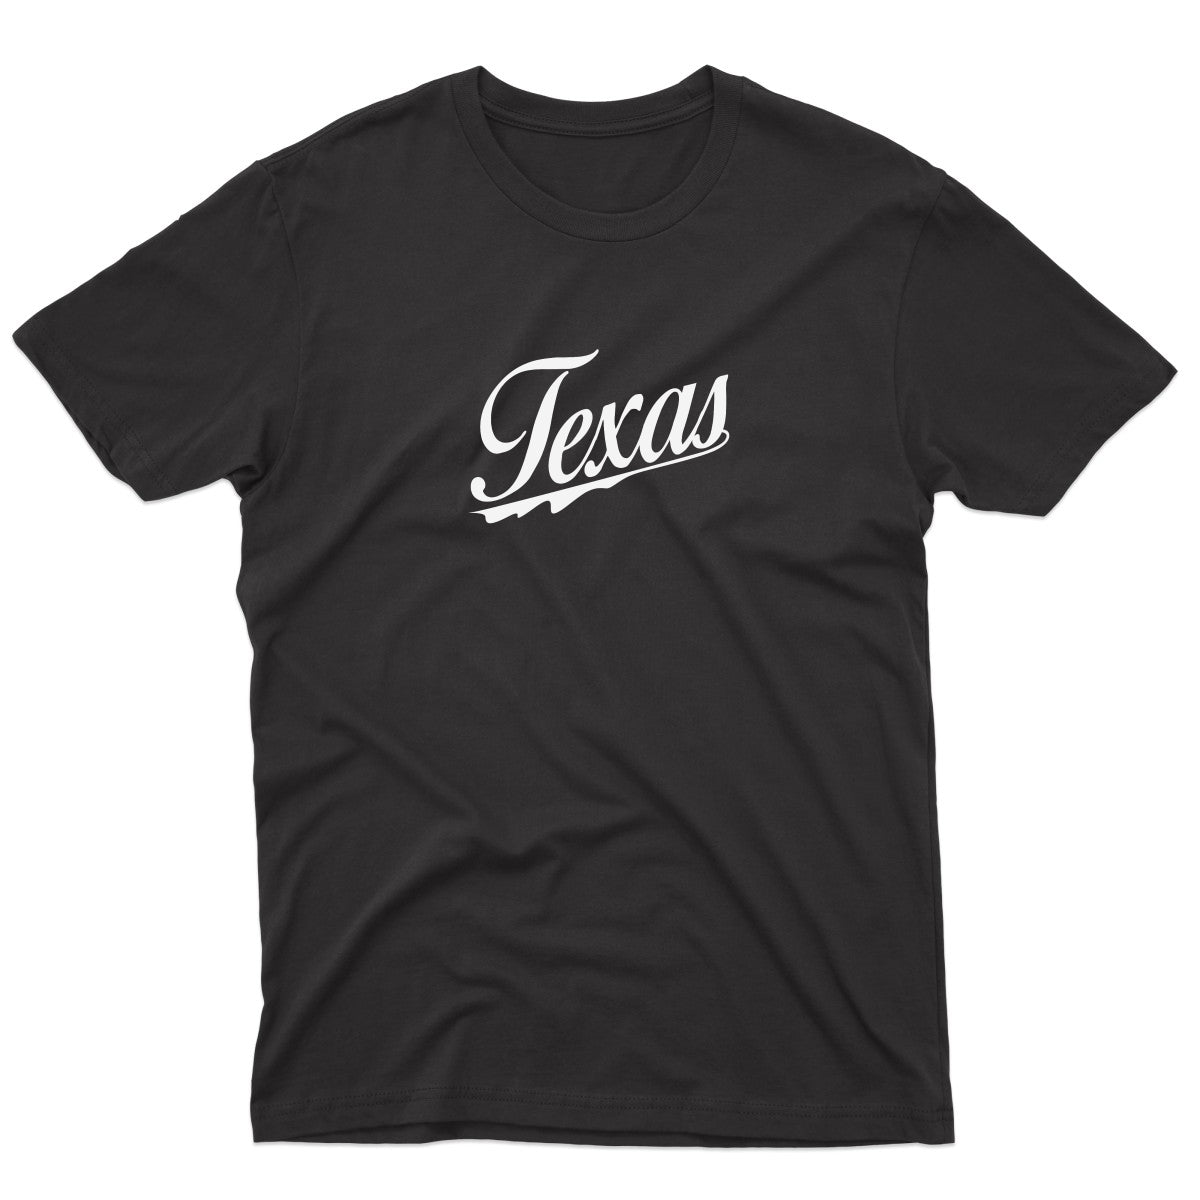 Texas Men's T-shirt